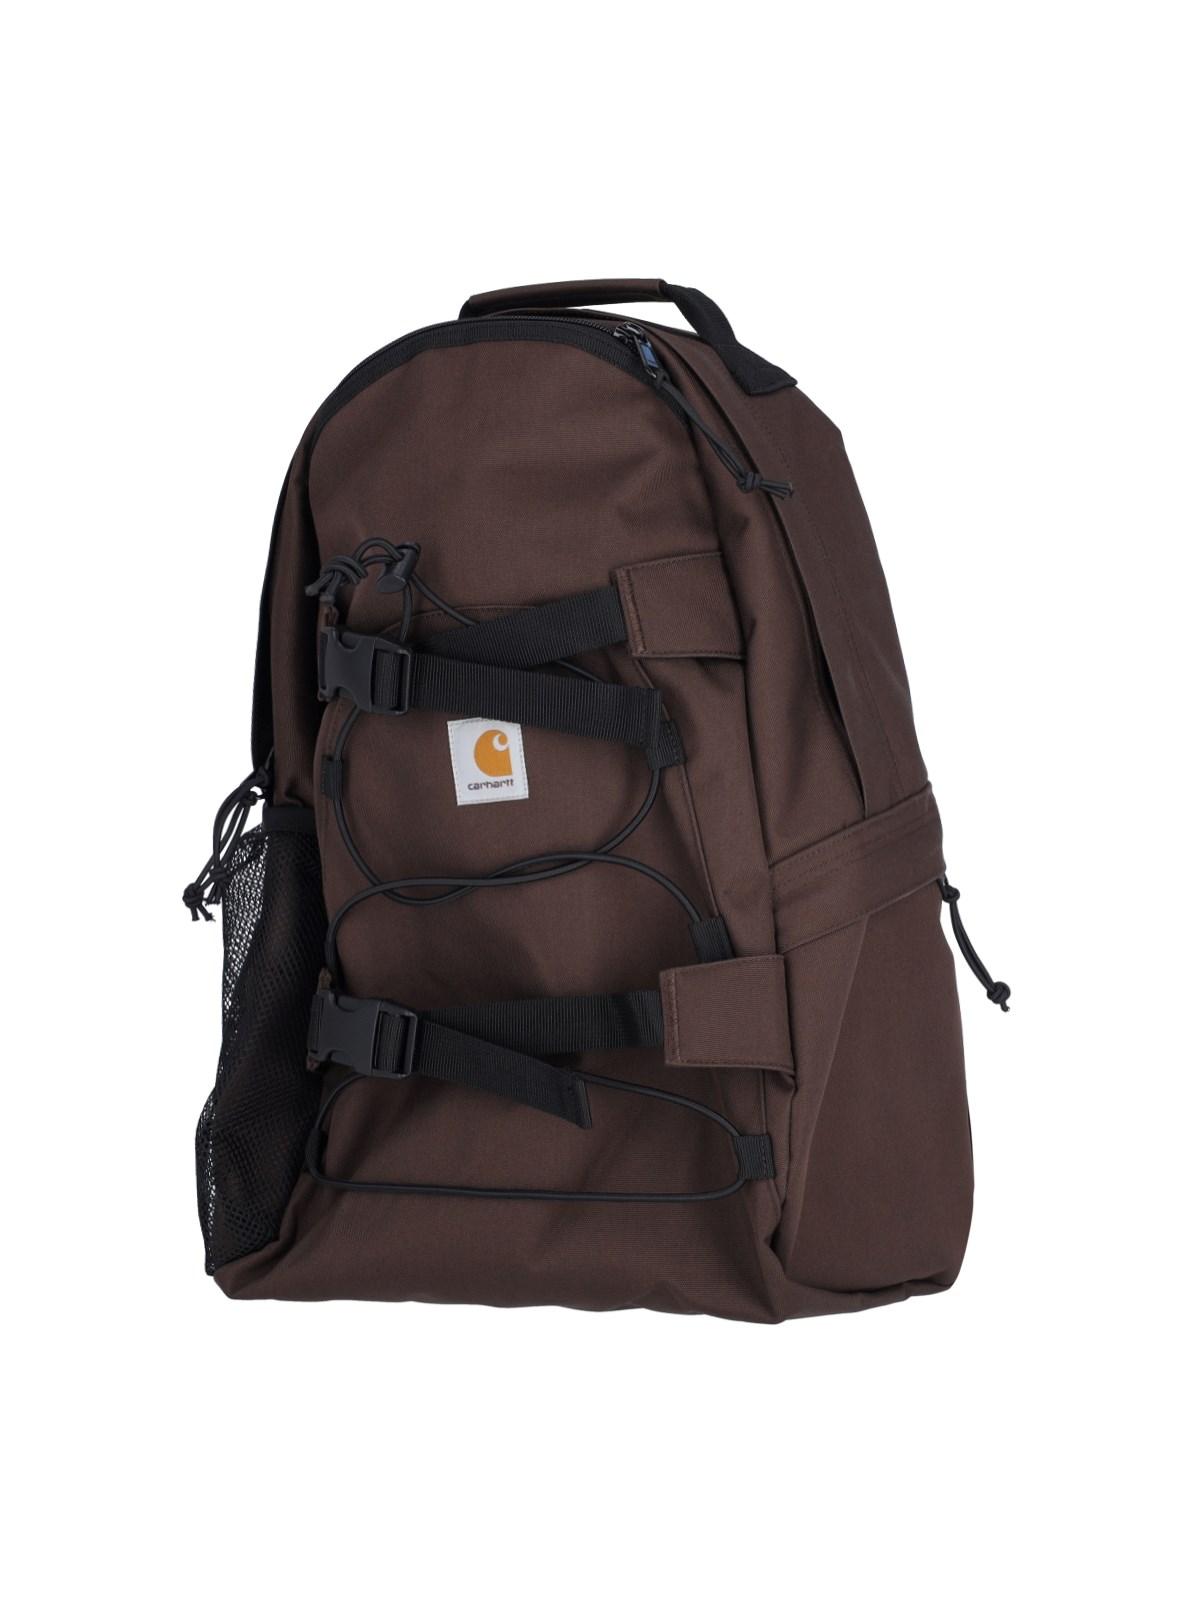 Carhartt 'kickflip' Backpack in Black | Lyst